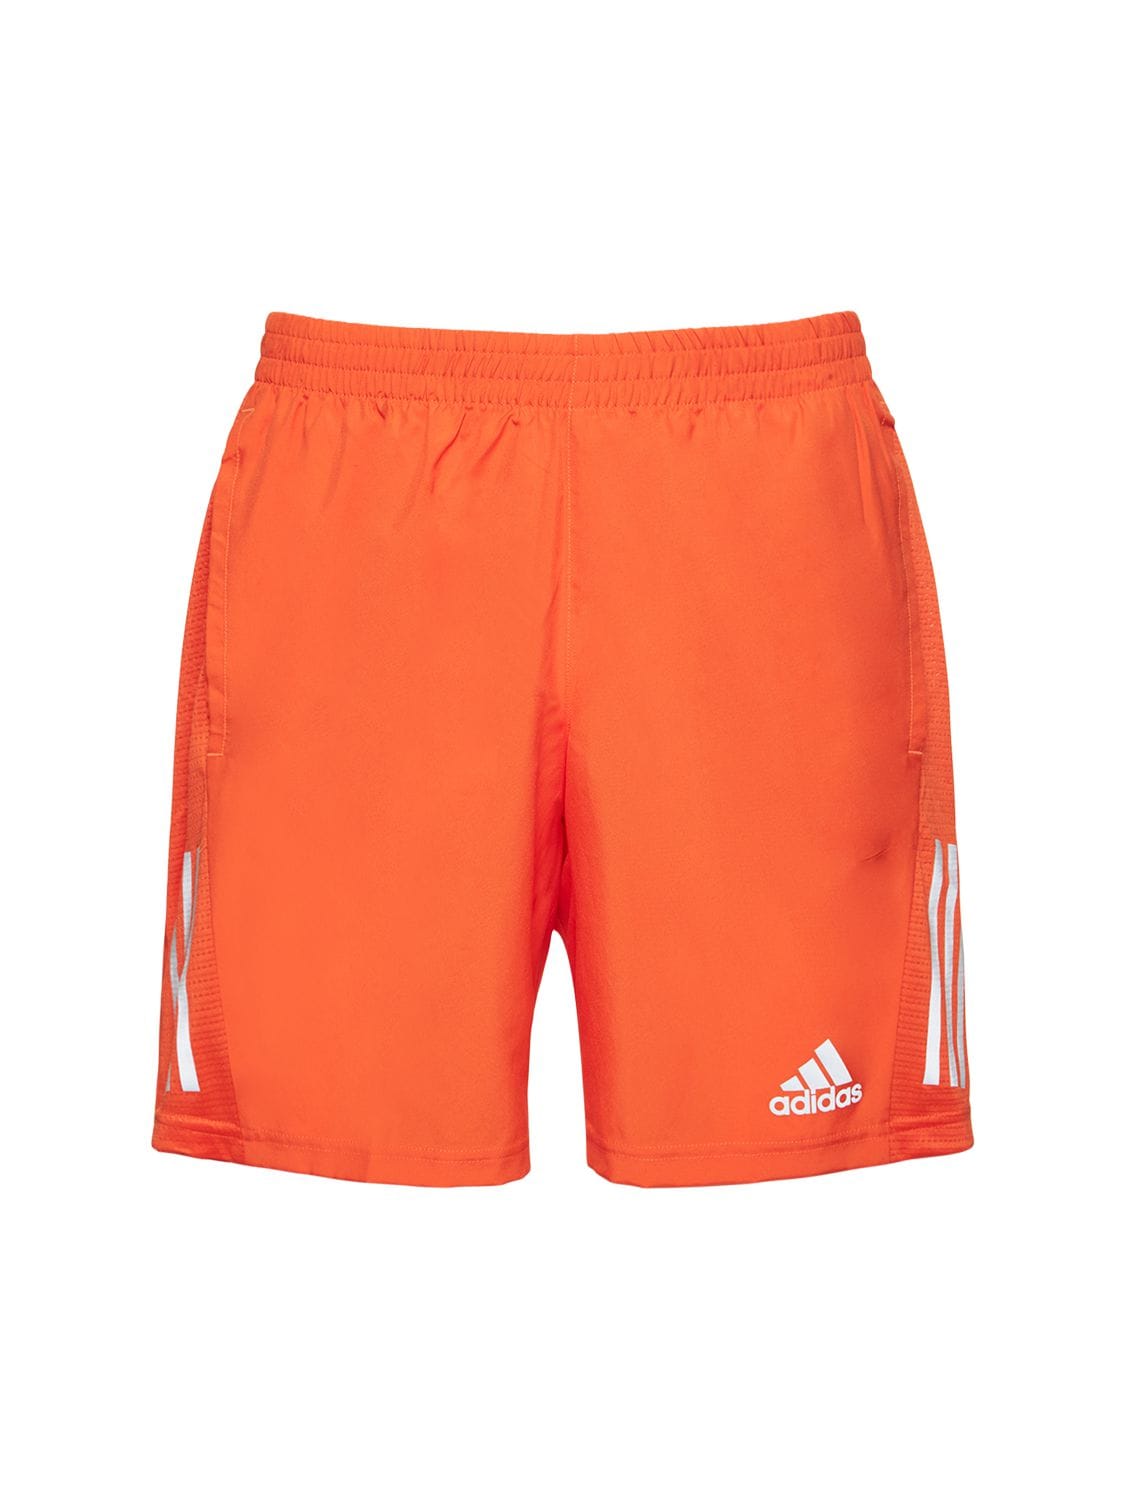 Adidas Originals Running Own The Shorts In Orange In Bright Red/relfective Silver | ModeSens